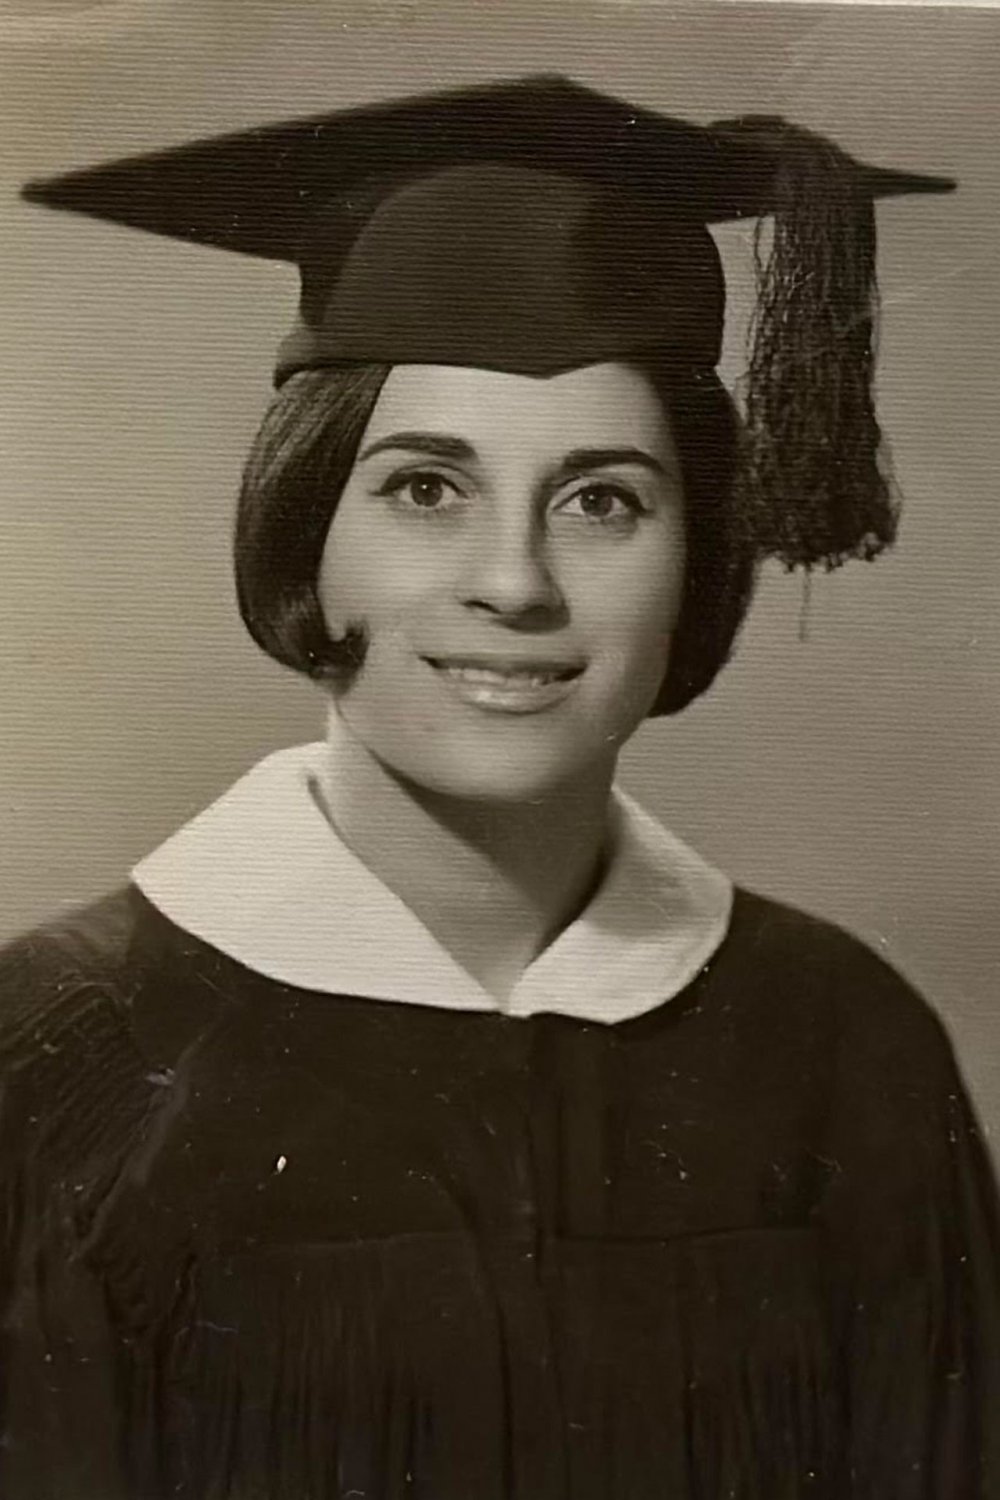 Graduation photo taken for Nina Bazouzi’s college yearbook, 1967